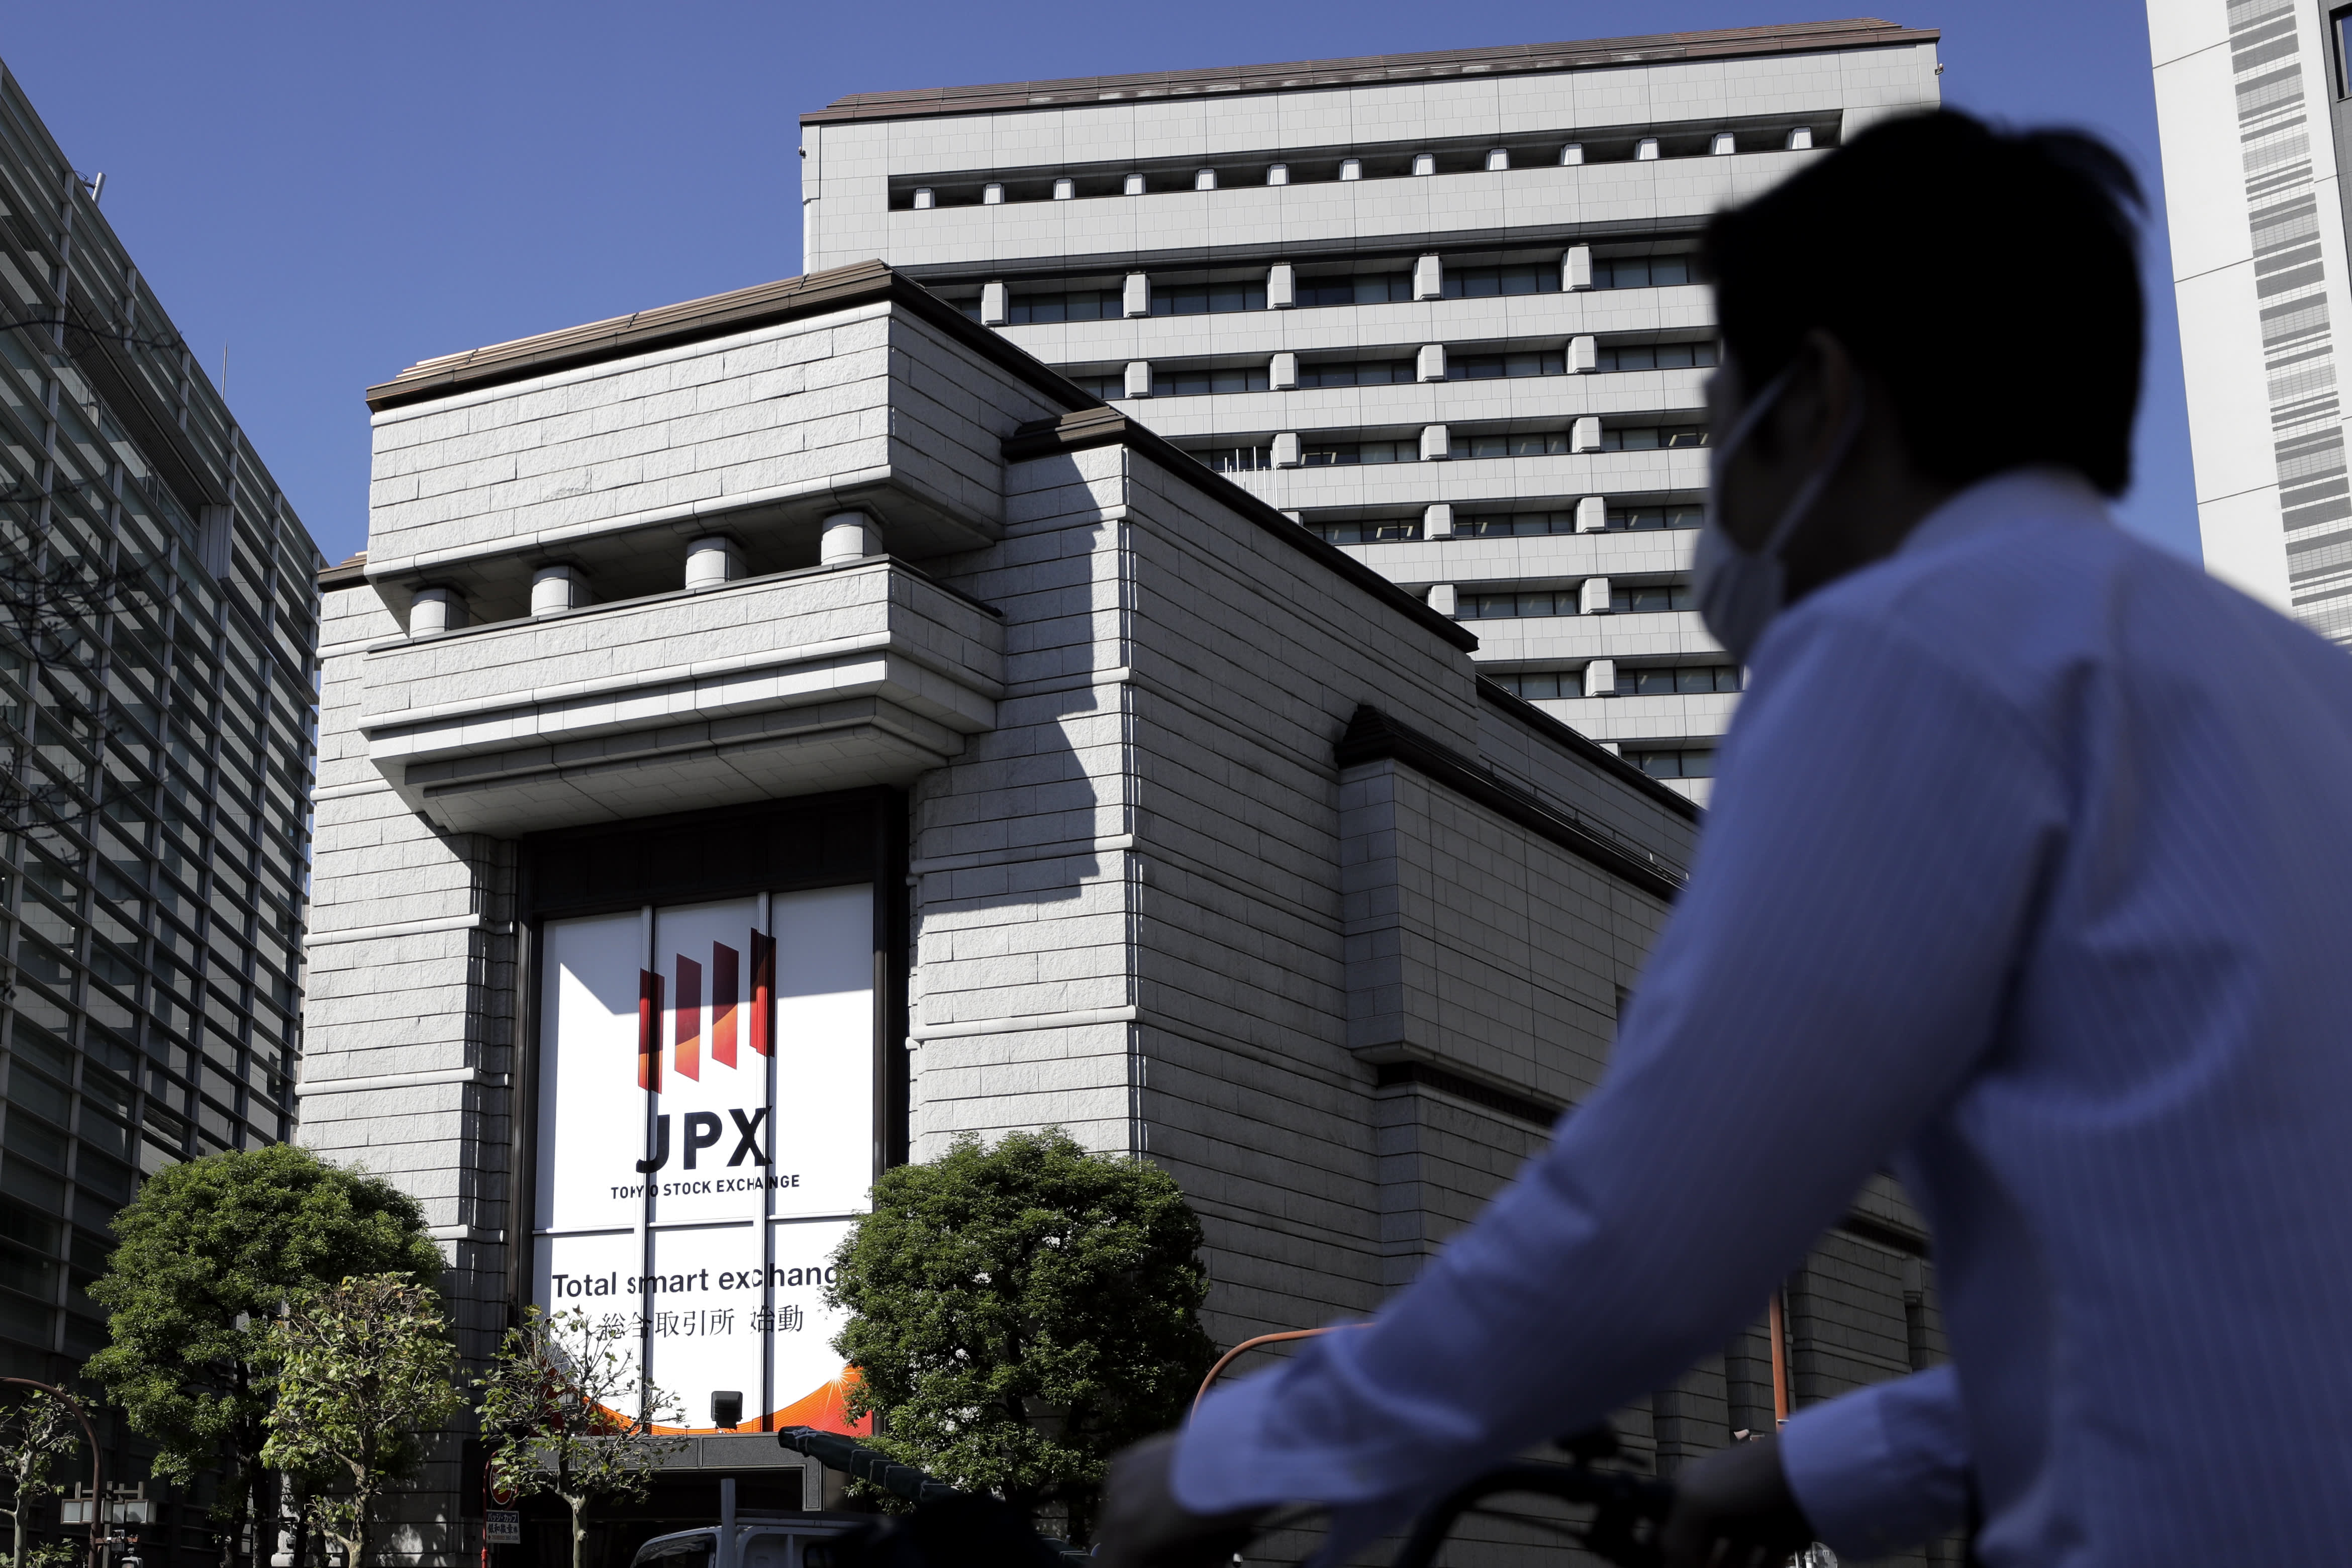 Japan's Nikkei drops 2% as investors monitor Ukraine tensions; oil rises more than 1%